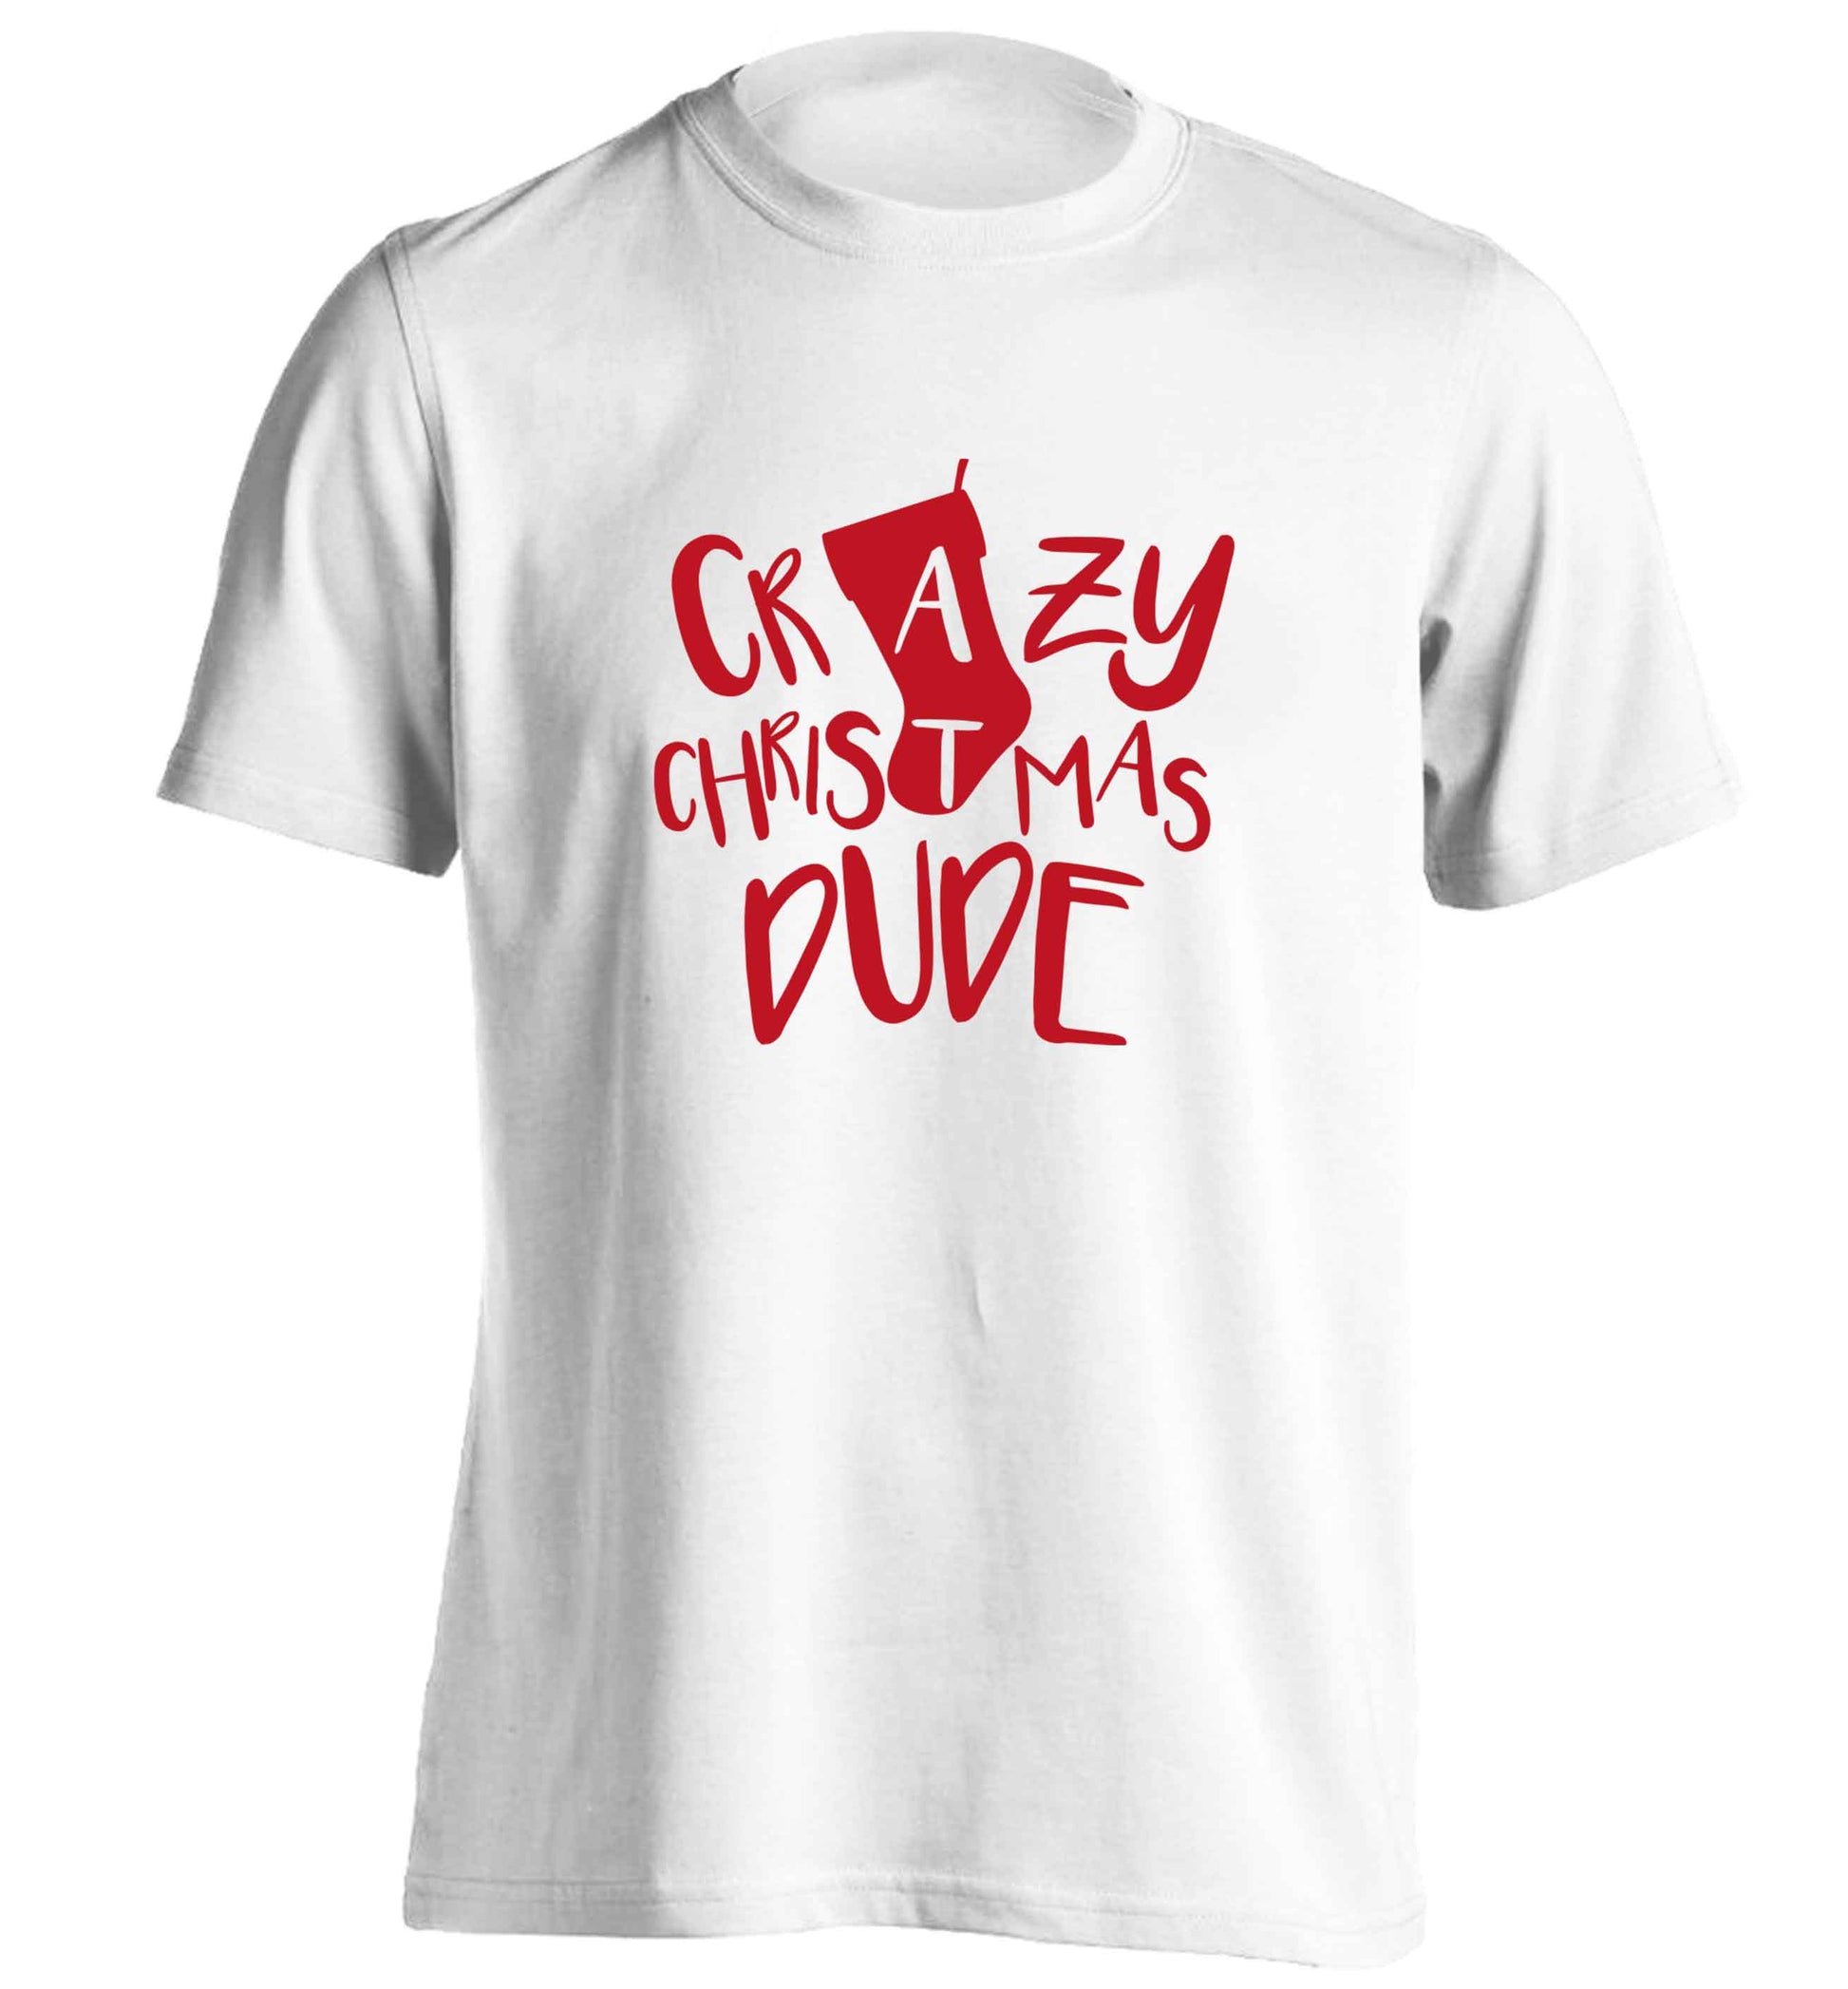 Crazy Christmas Dude adults unisex white Tshirt 2XL